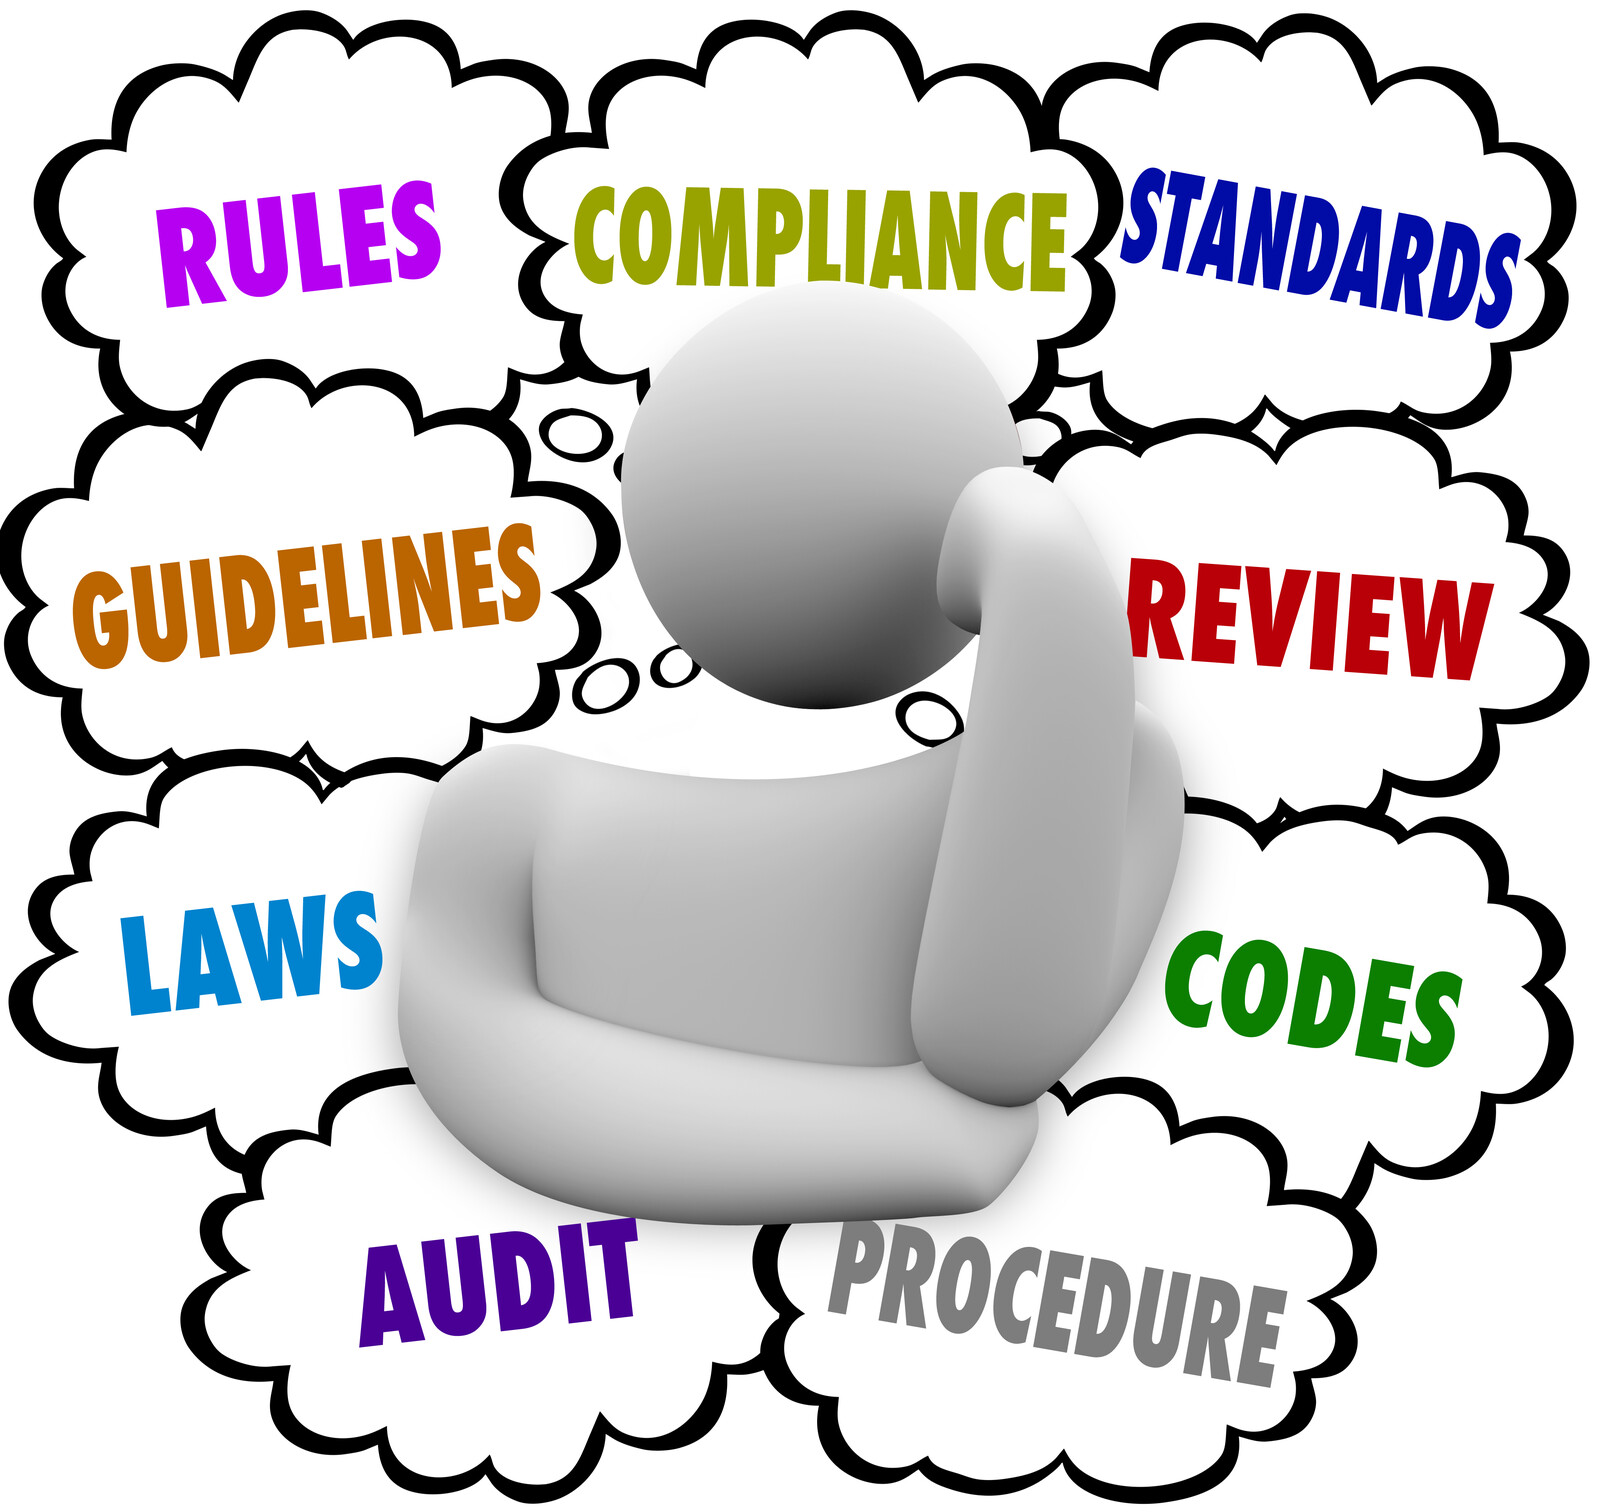 HIPAA Compliance Services